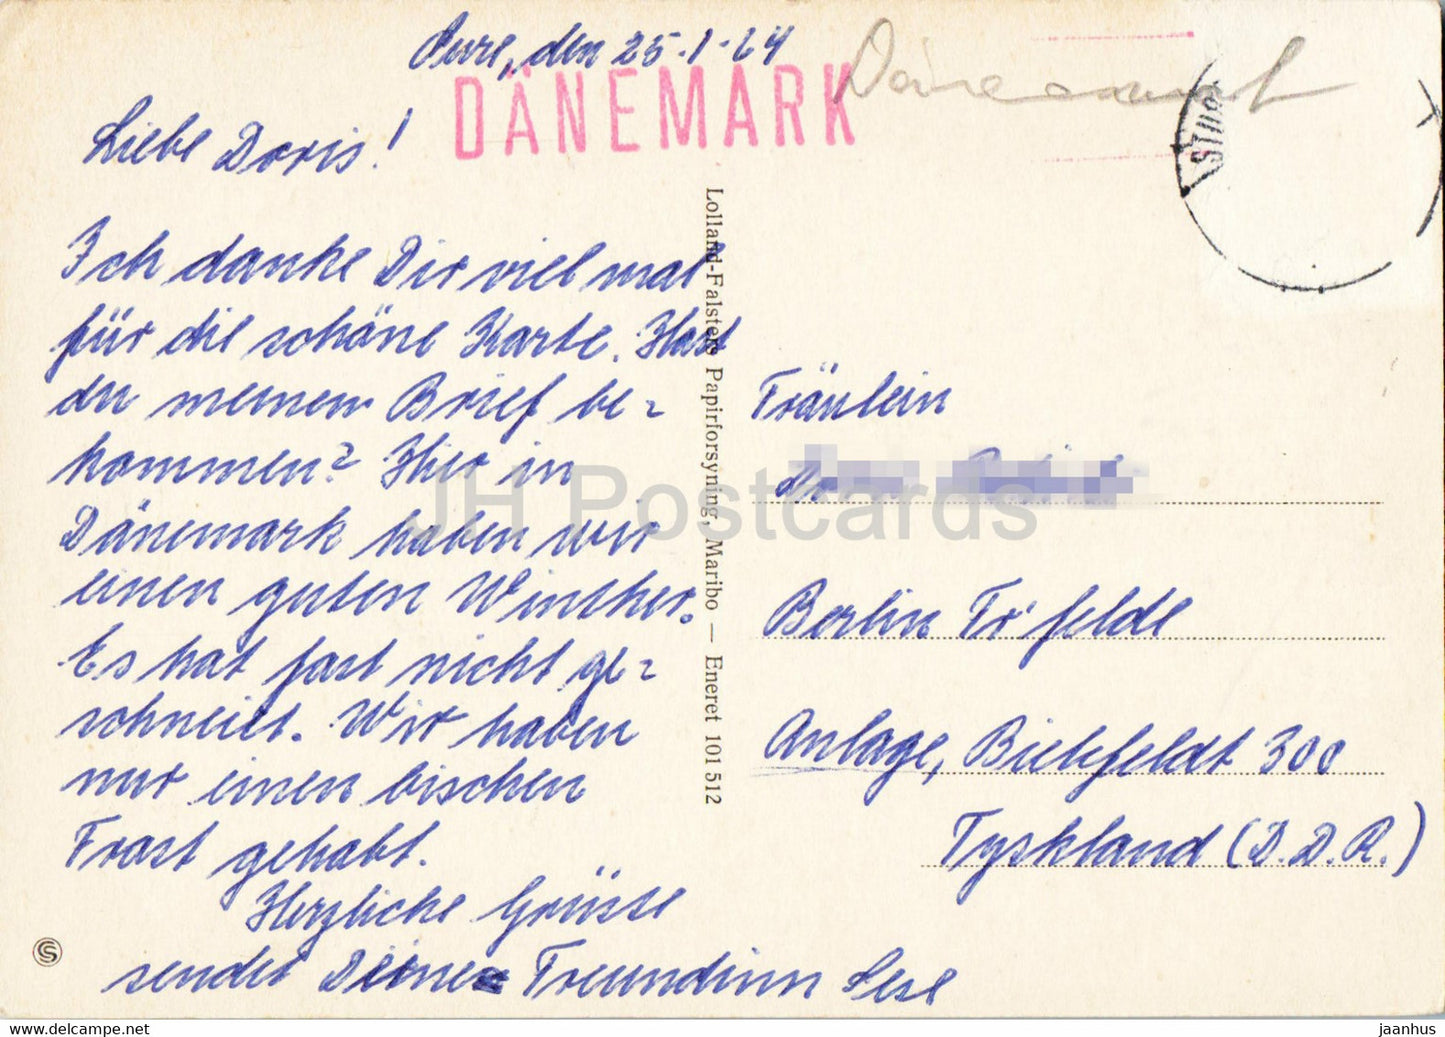 Rodby Havn - plage - carte postale ancienne - 1964 - Danemark - utilisé